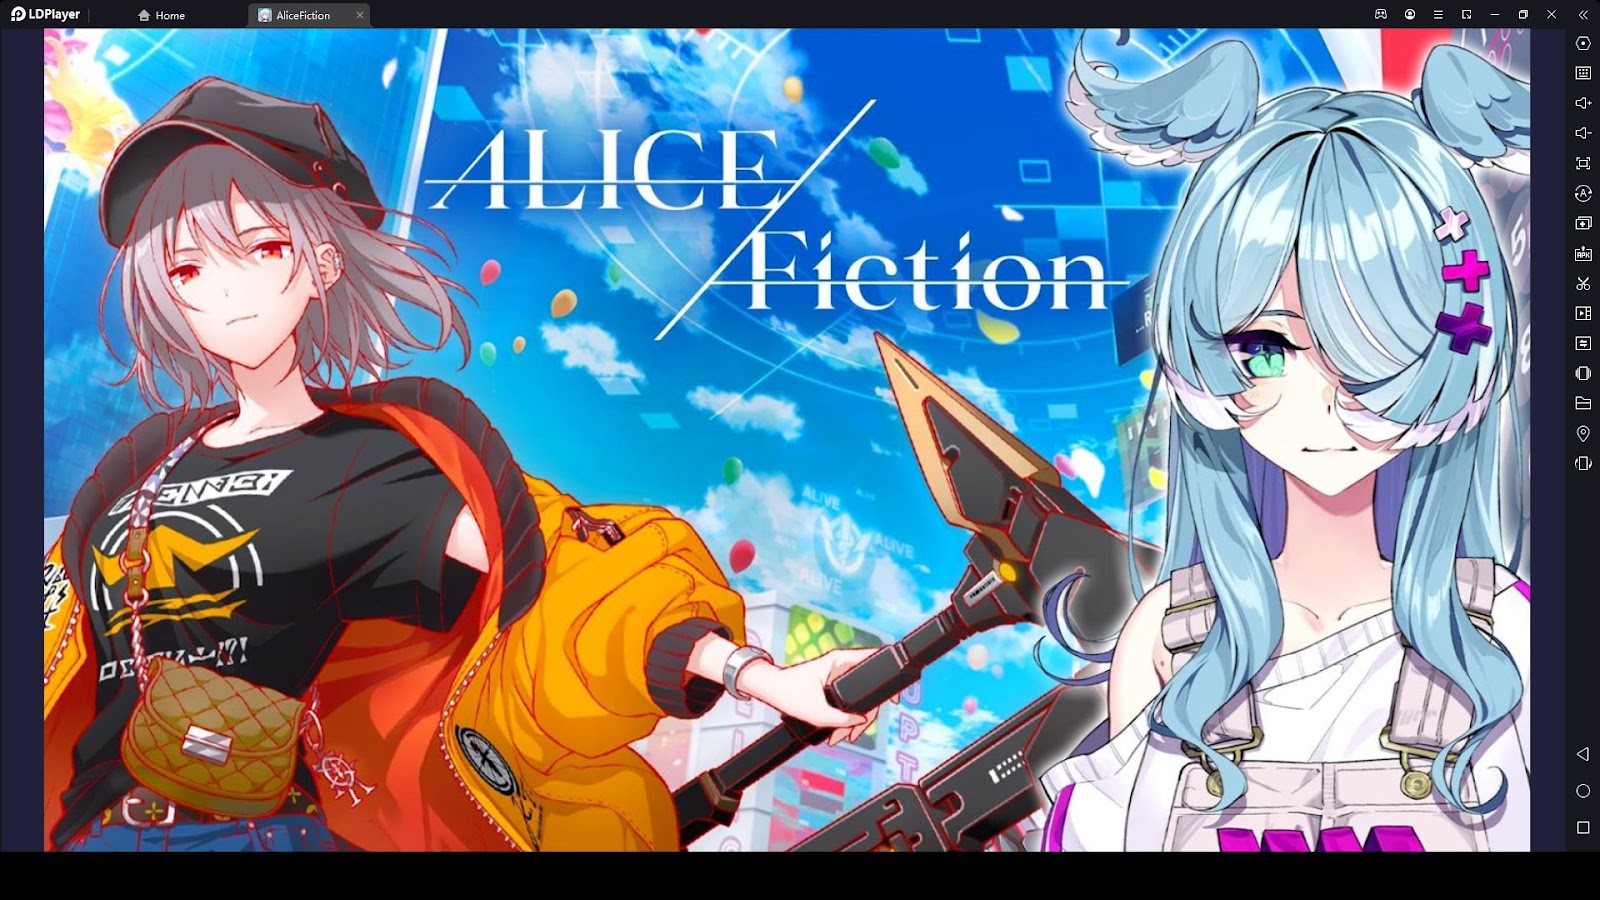 Alice Fiction tier list